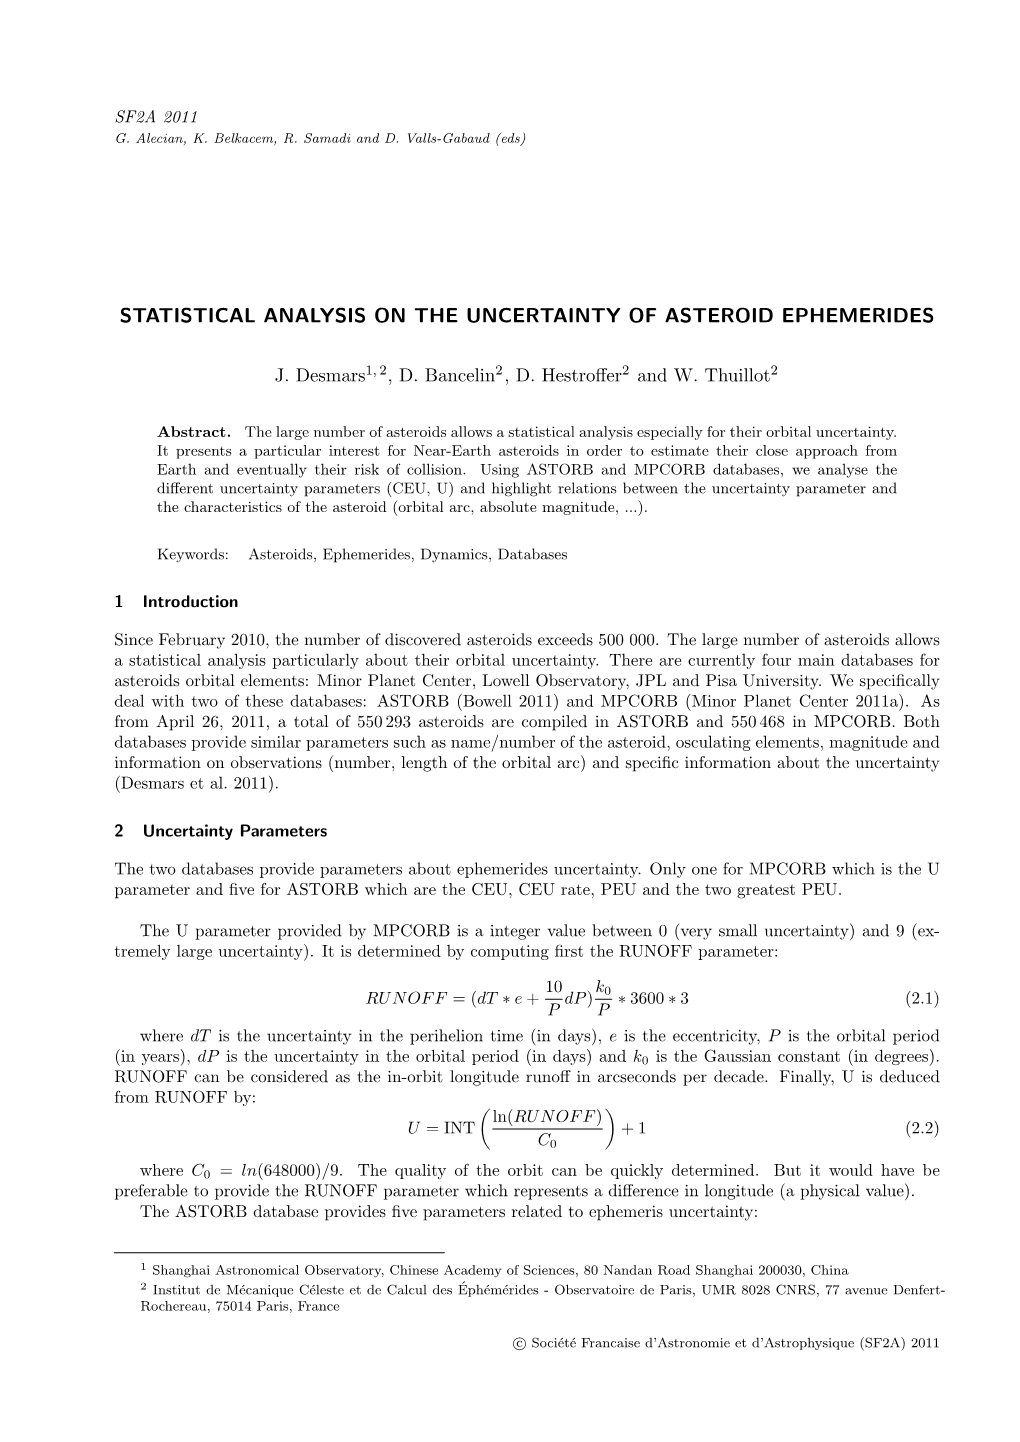 Statistical Analysis on the Uncertainty of Asteroid Ephemerides